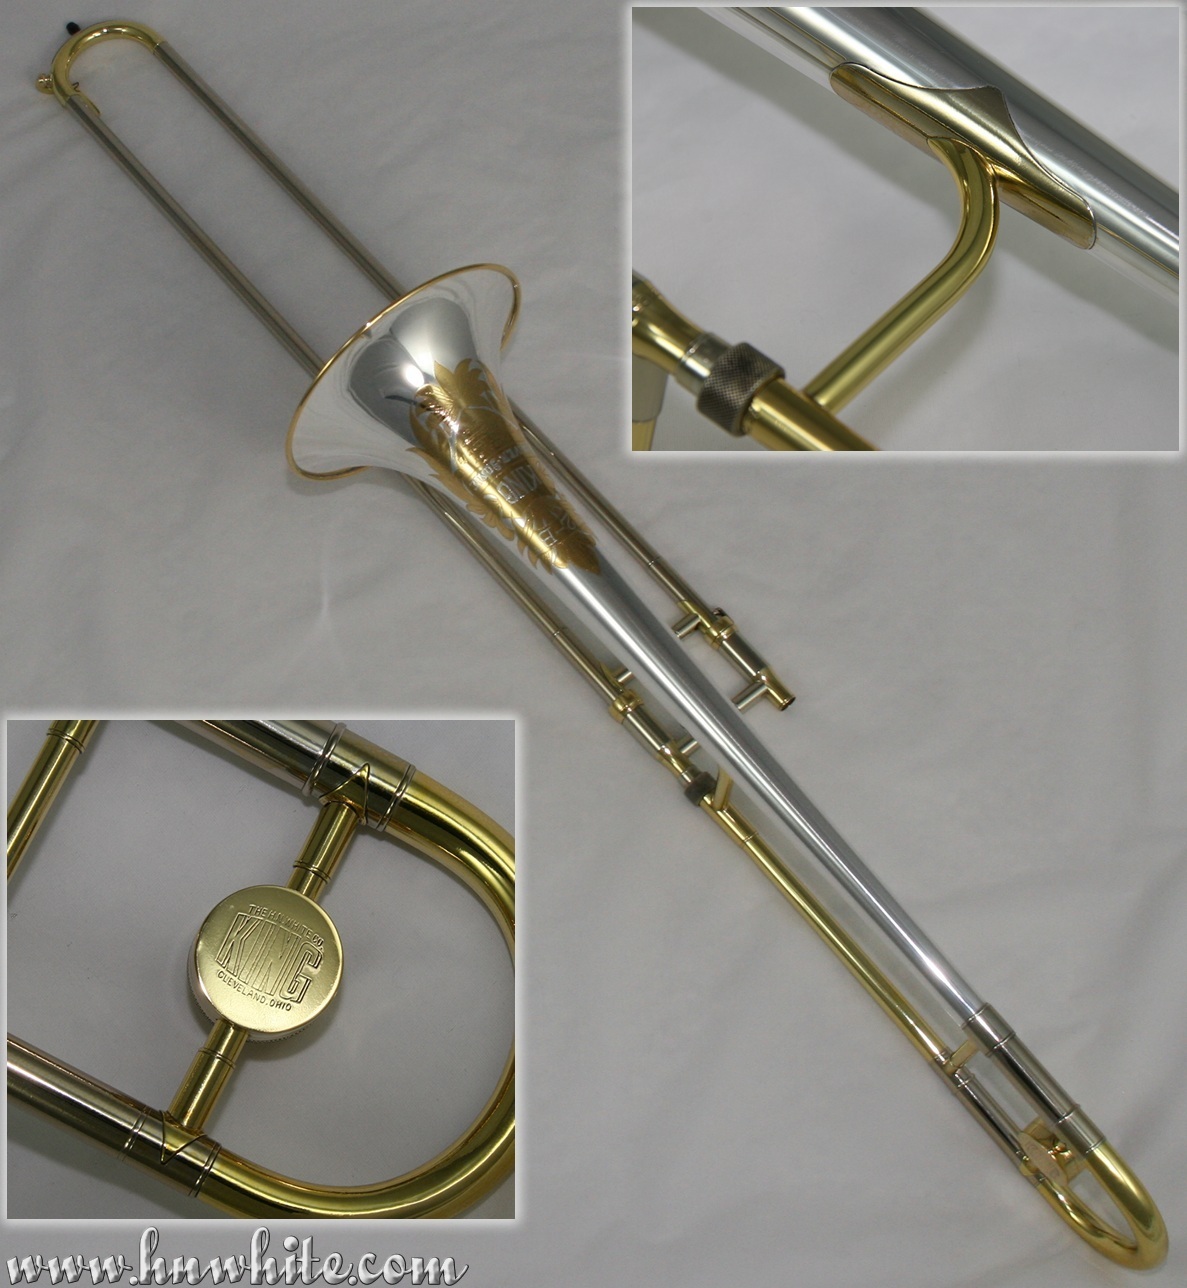 1963 conn trumpet serial numbers